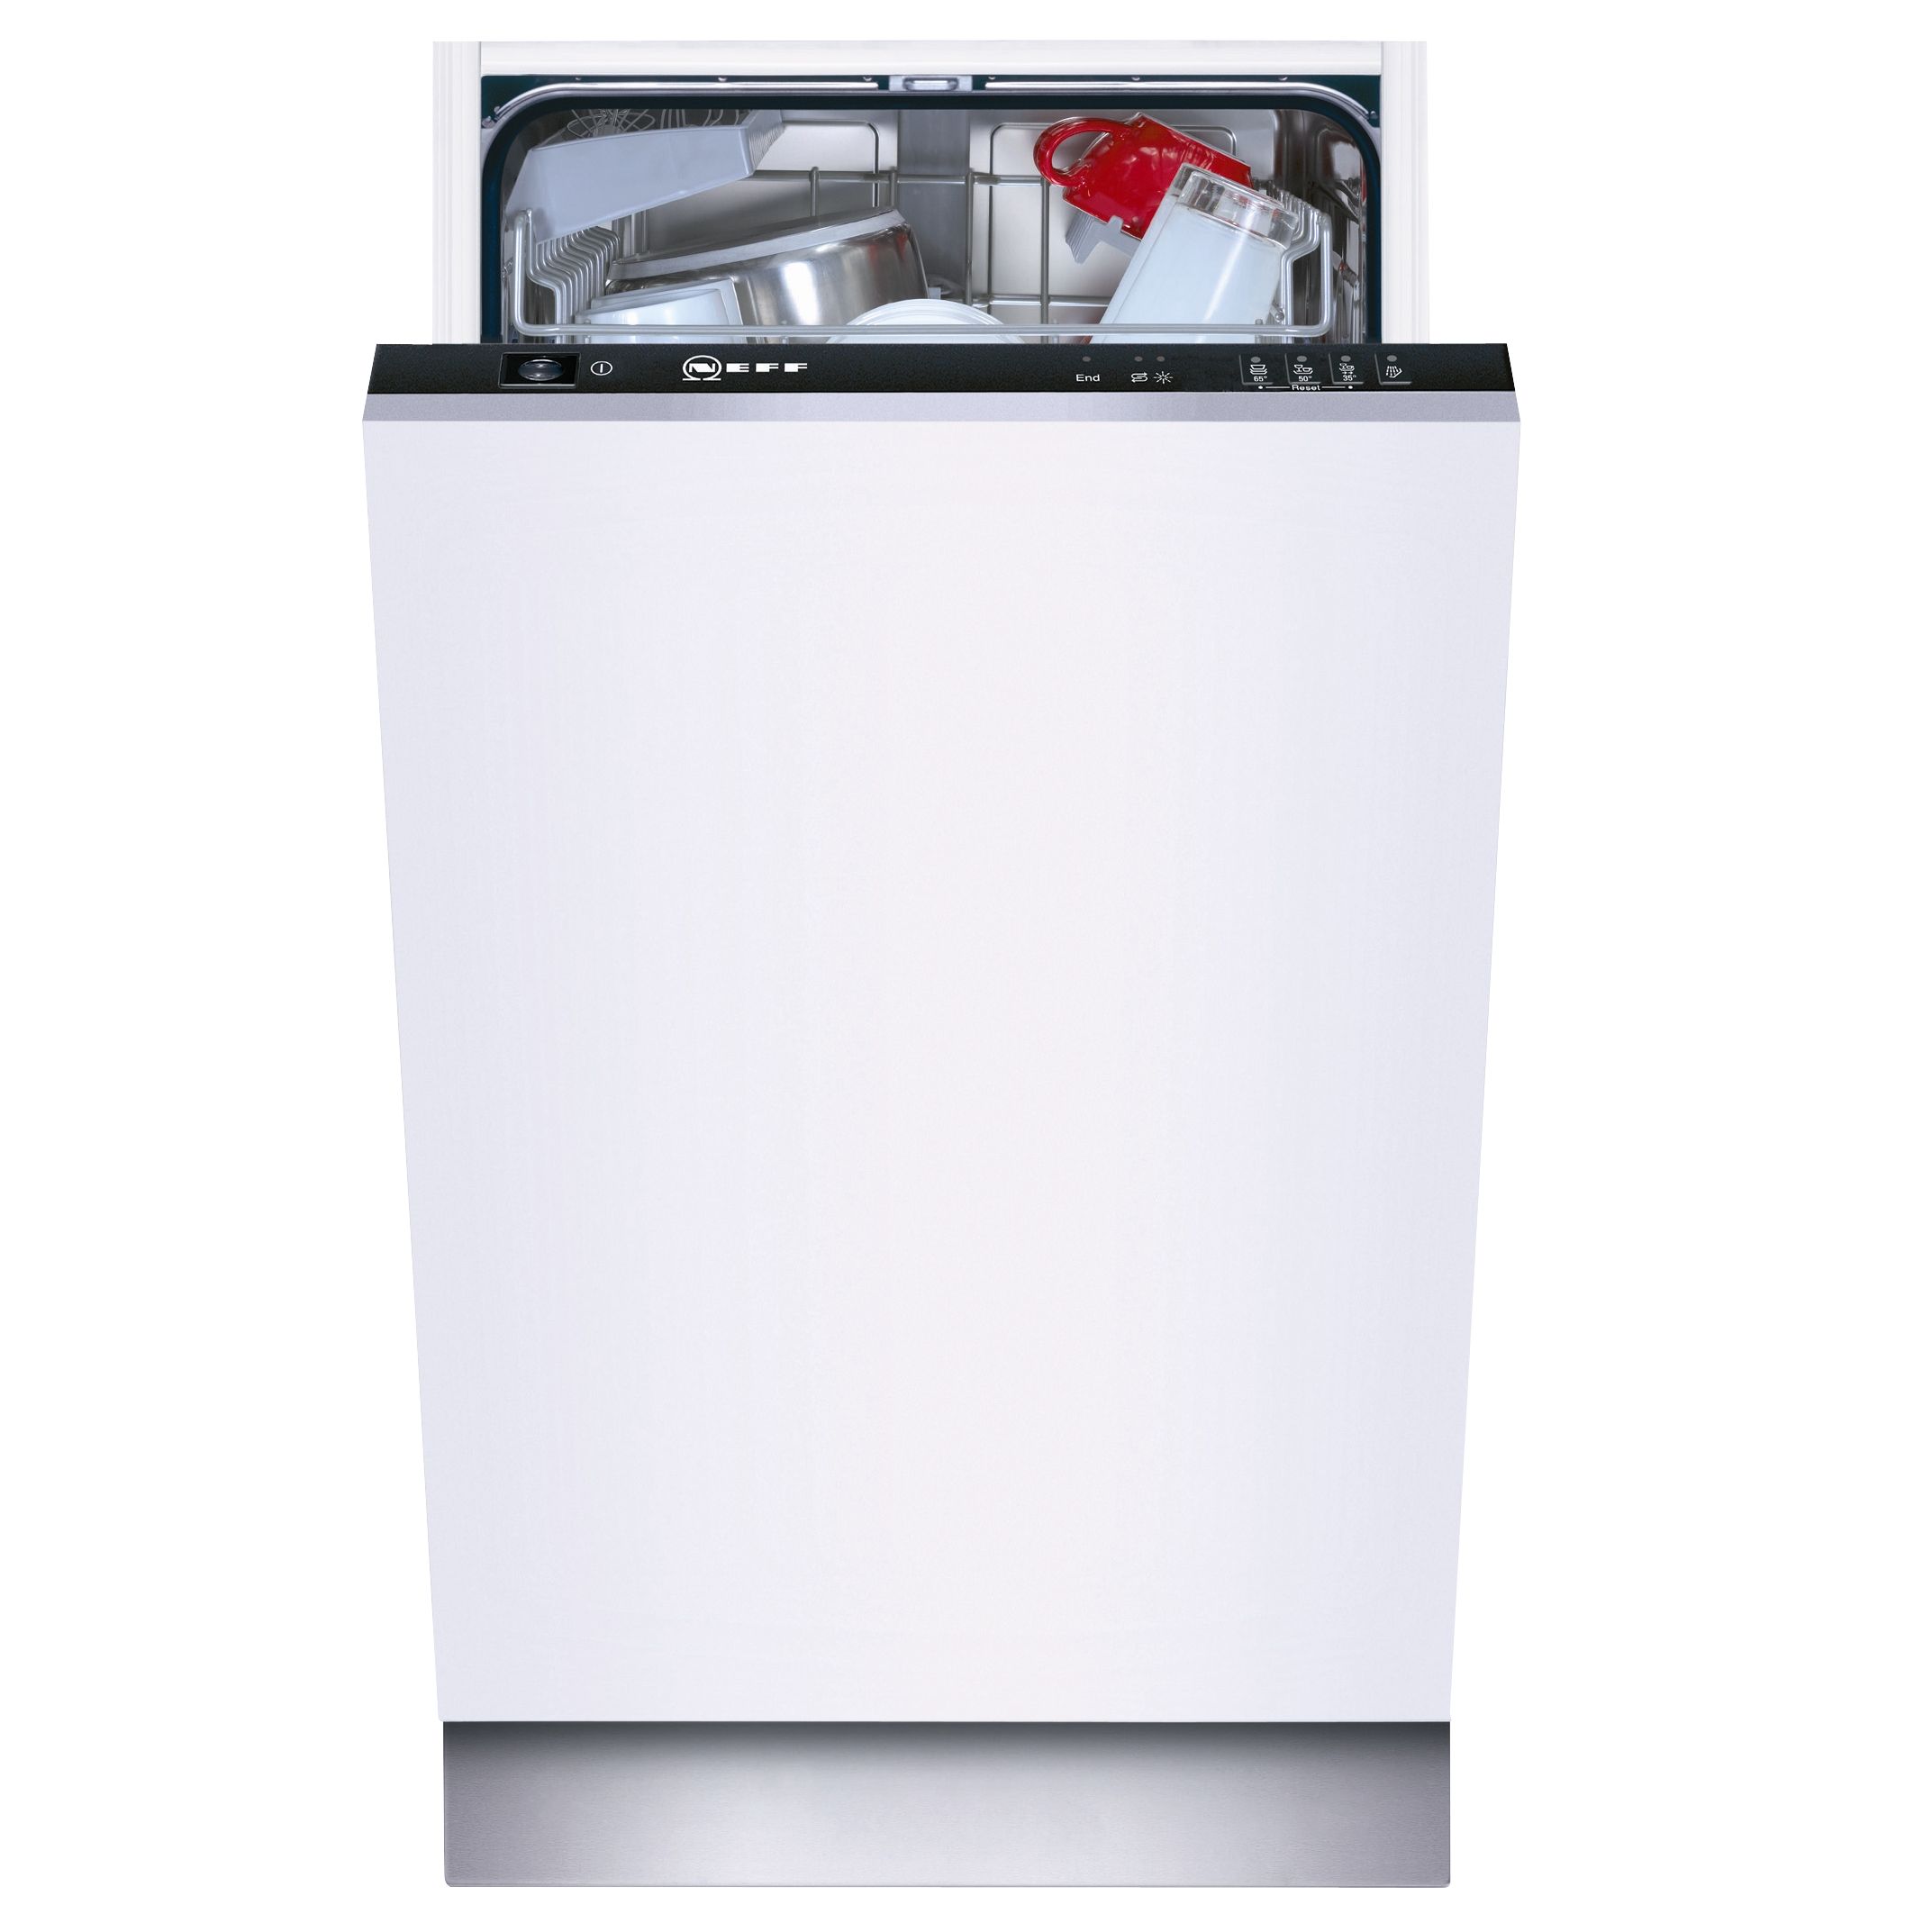 Neff S5943X2 Integrated Slimline Dishwasher at John Lewis